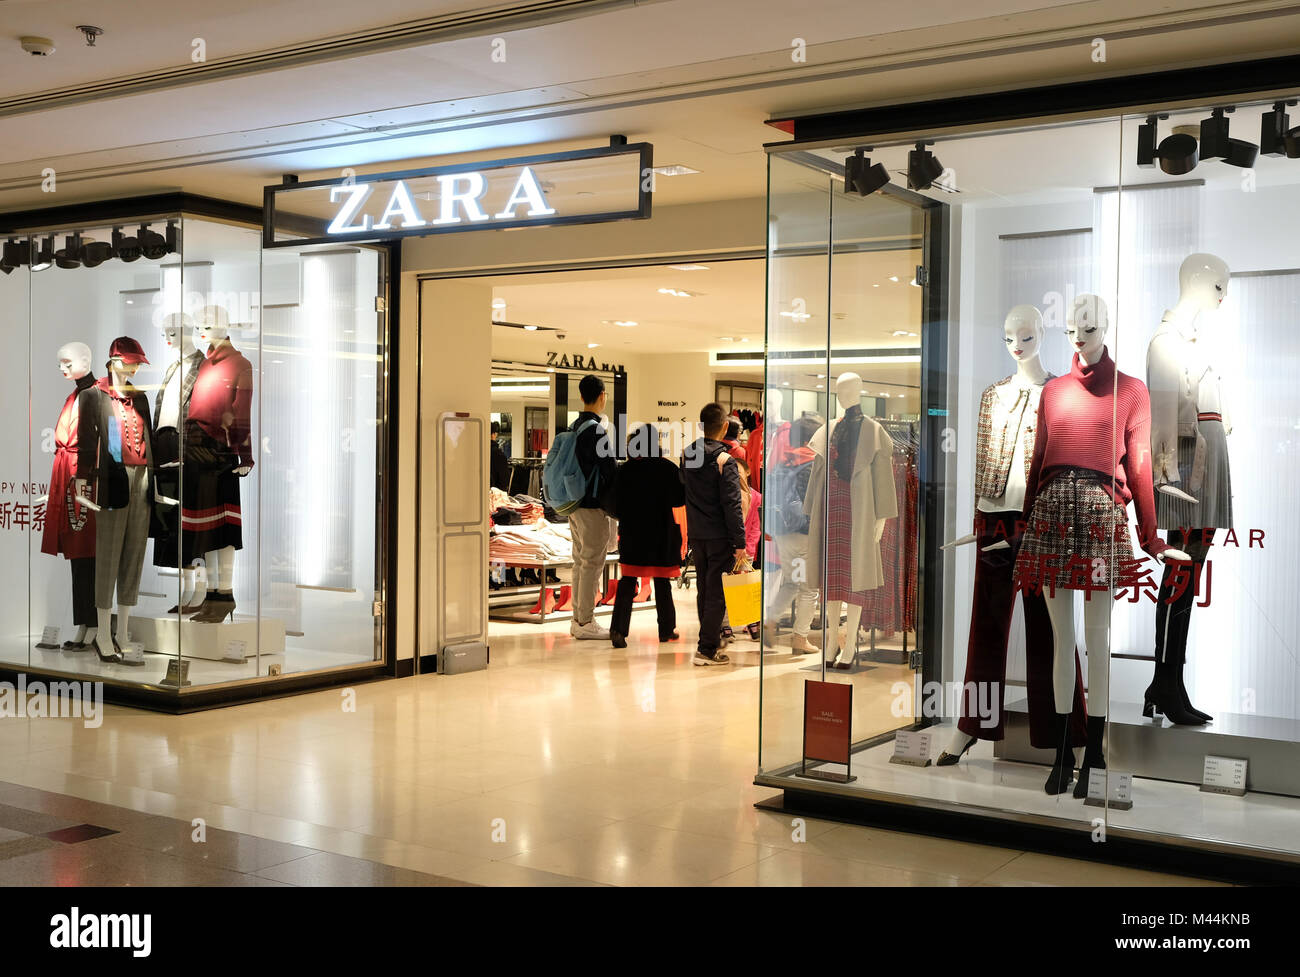 Zara Lyon 1 Flash Sales, 57% OFF | www.ingeniovirtual.com